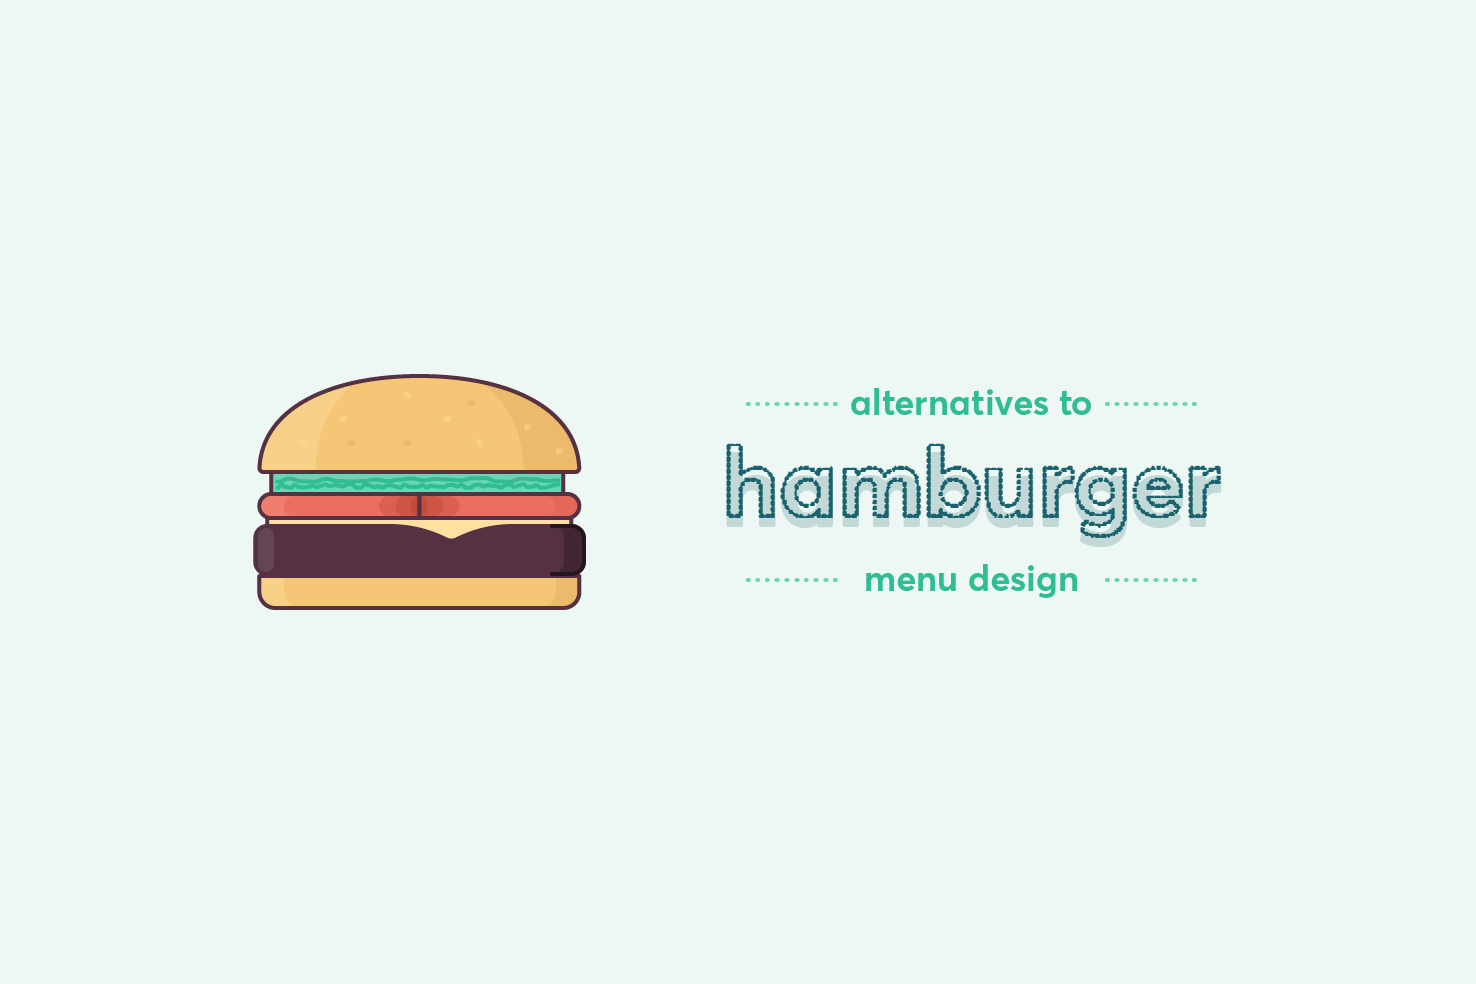 Websites using alternatives to the ‘hamburger’